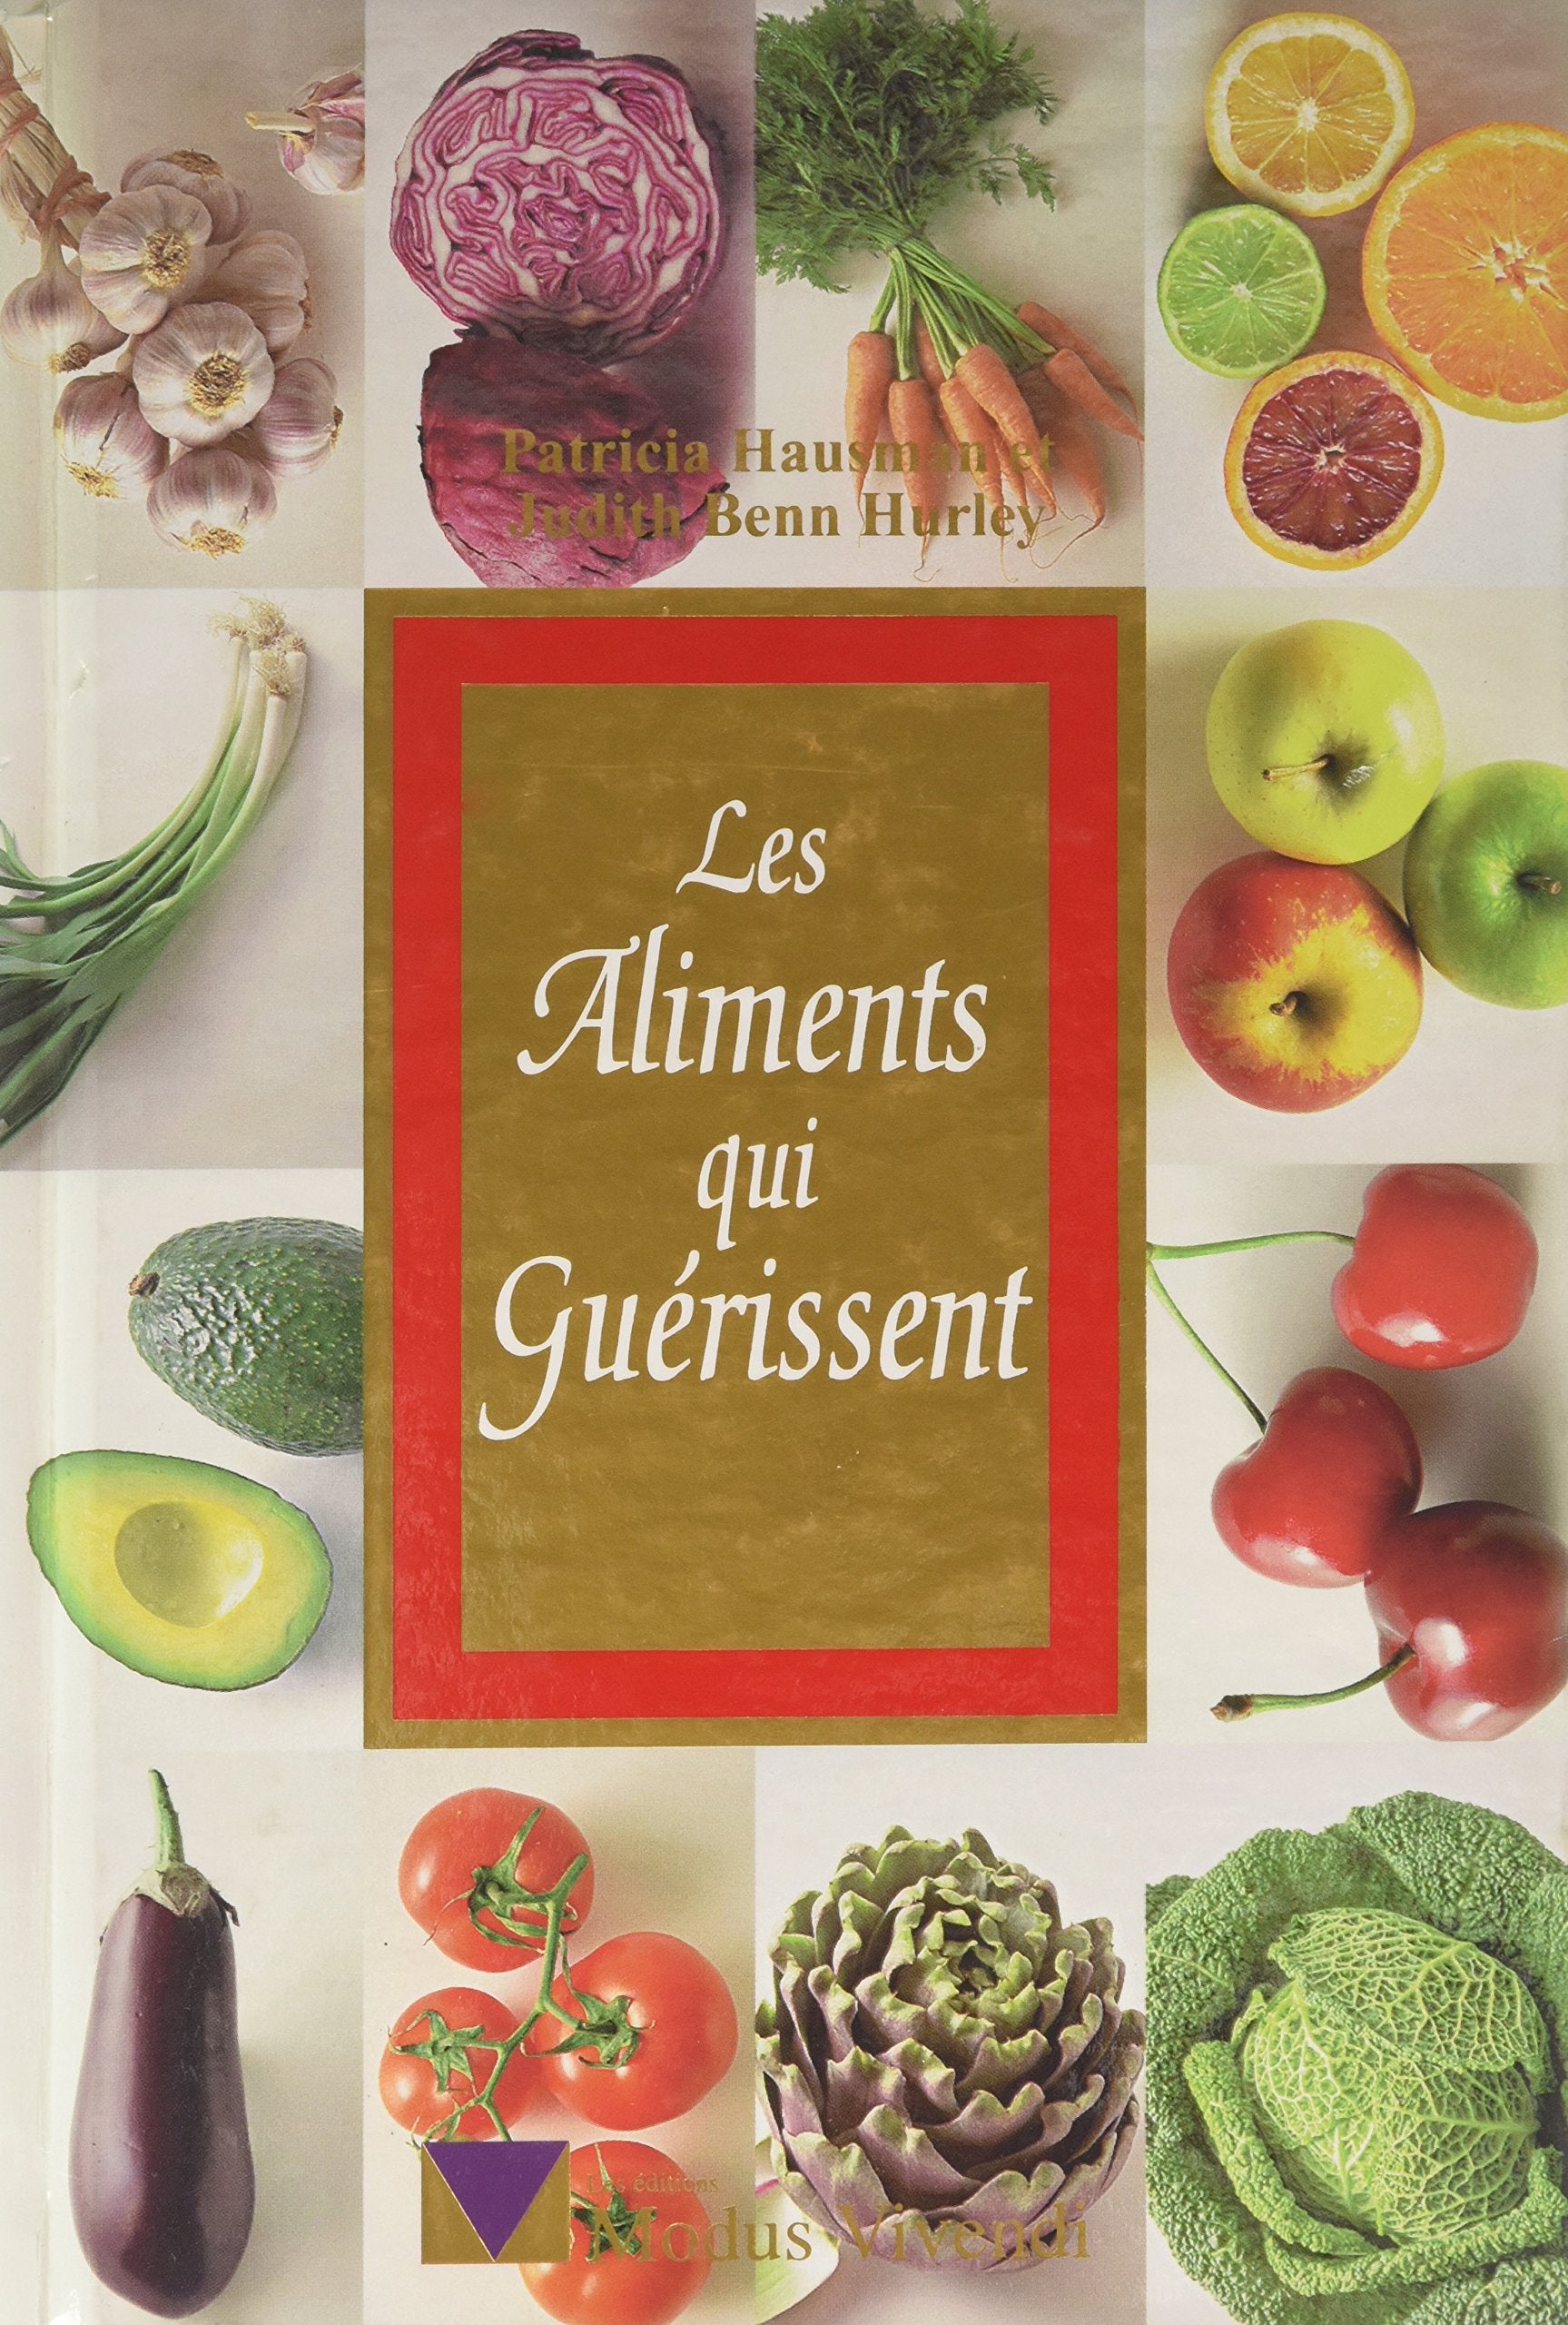 Livre ISBN 2921556383 Les aliments qui guérissent (Patricia Hausman)